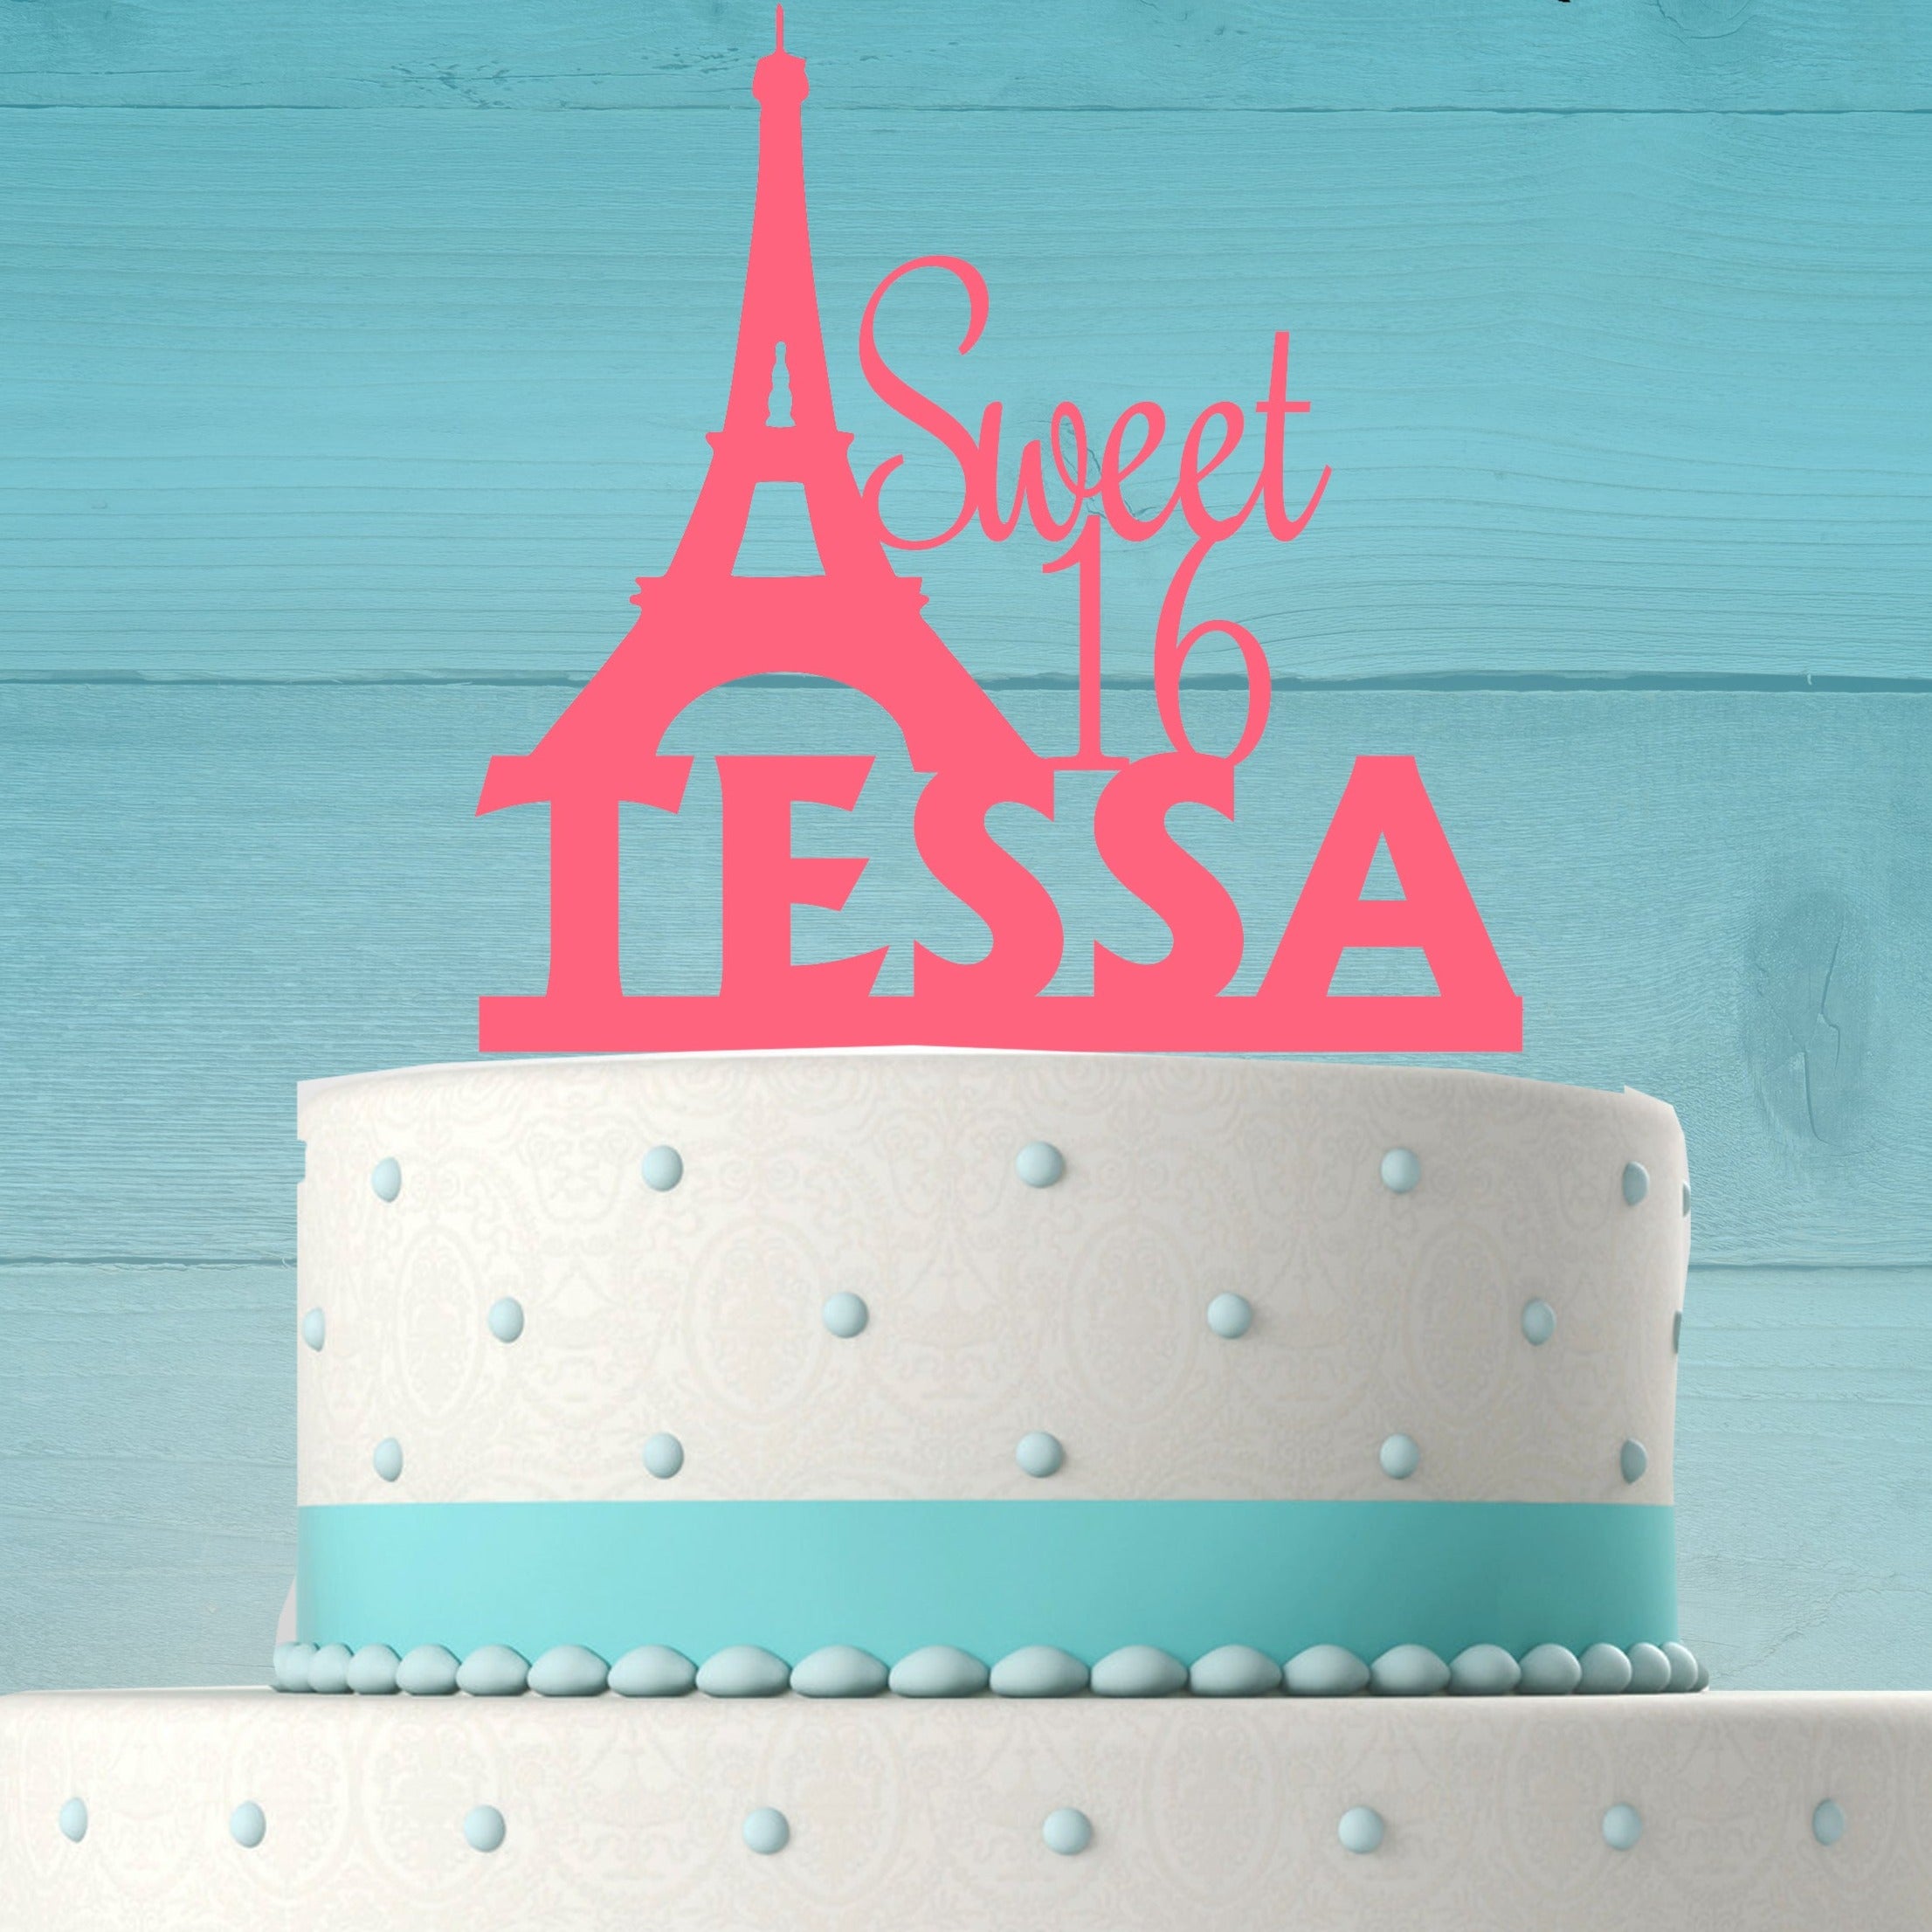 16 Beautiful Sweet 16 Cakes - Alyce Paris